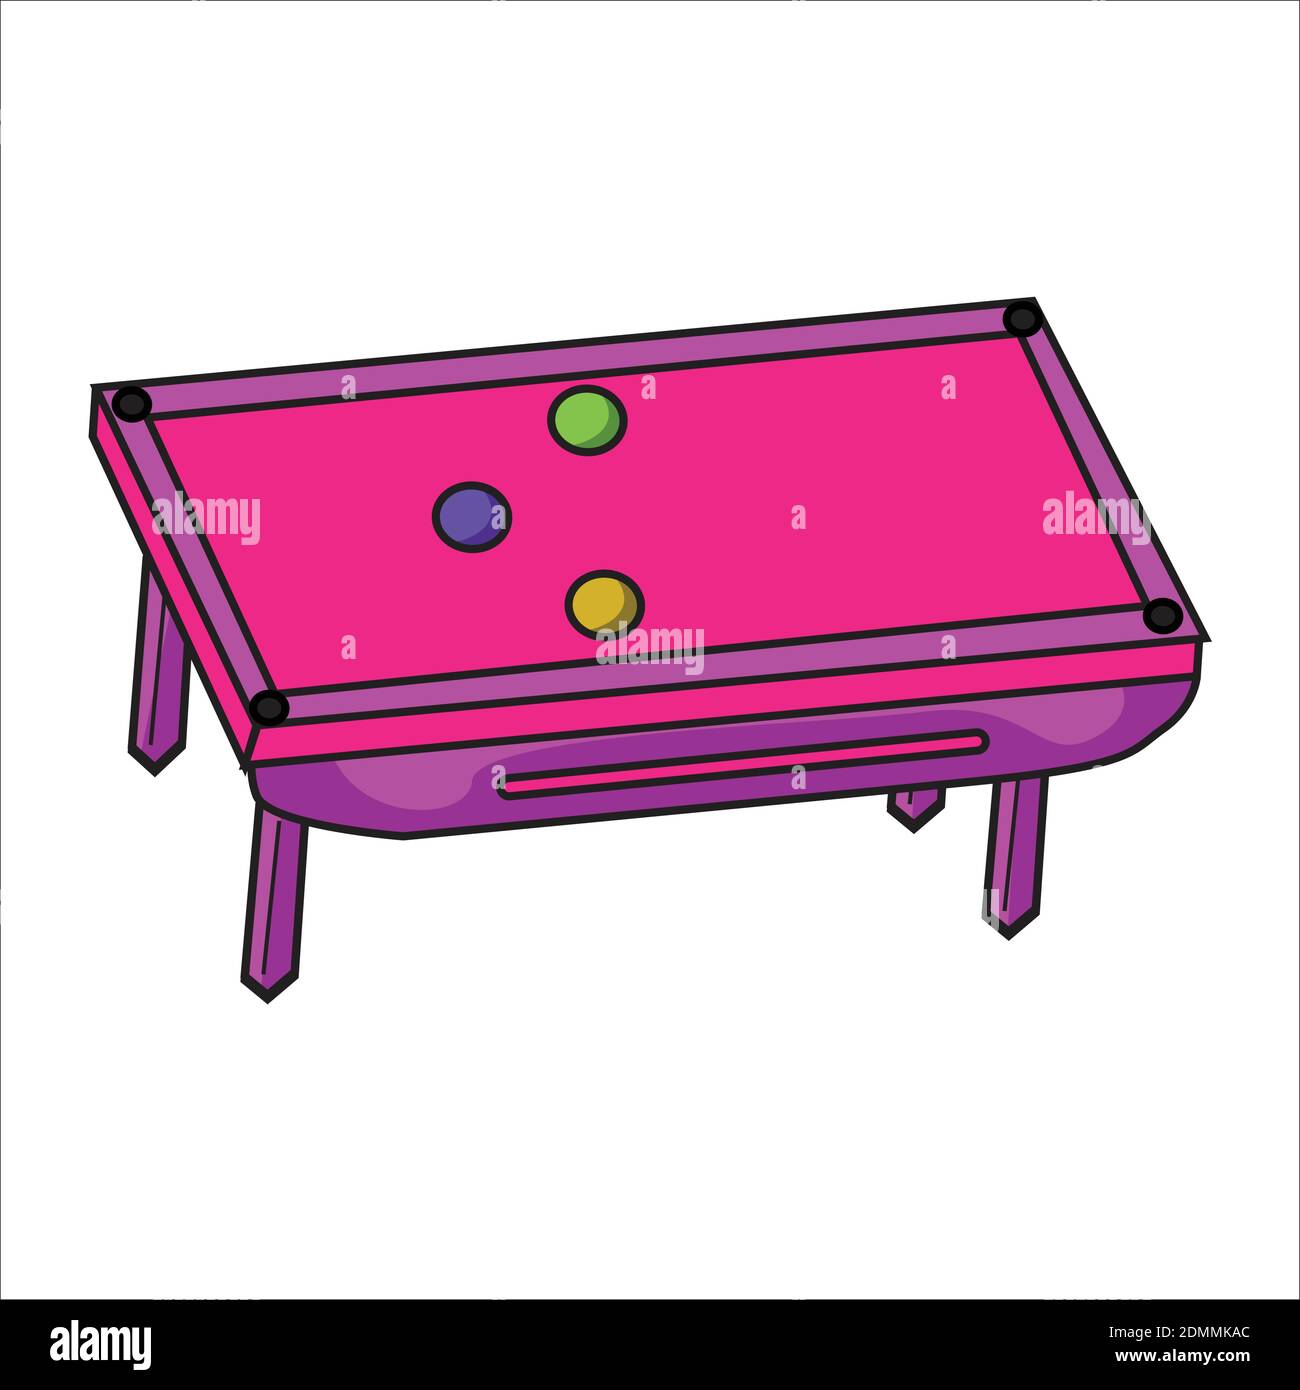 Steel Pool table. Illustration, Vector Pool Table variation. Stock Vector